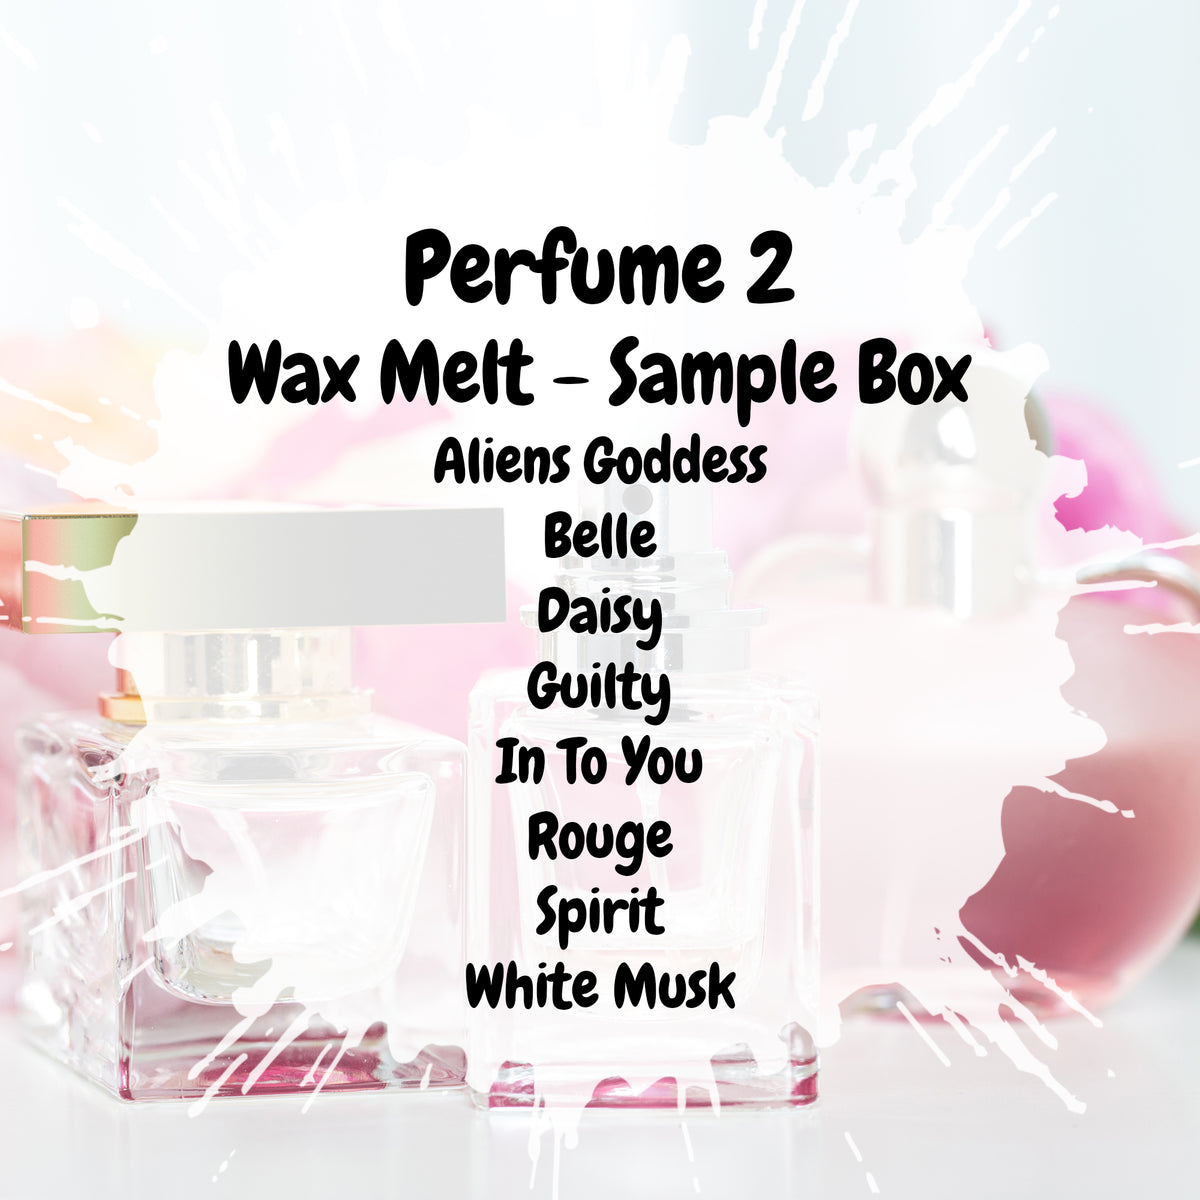 Perfume 2 Wax Melt Sample Box